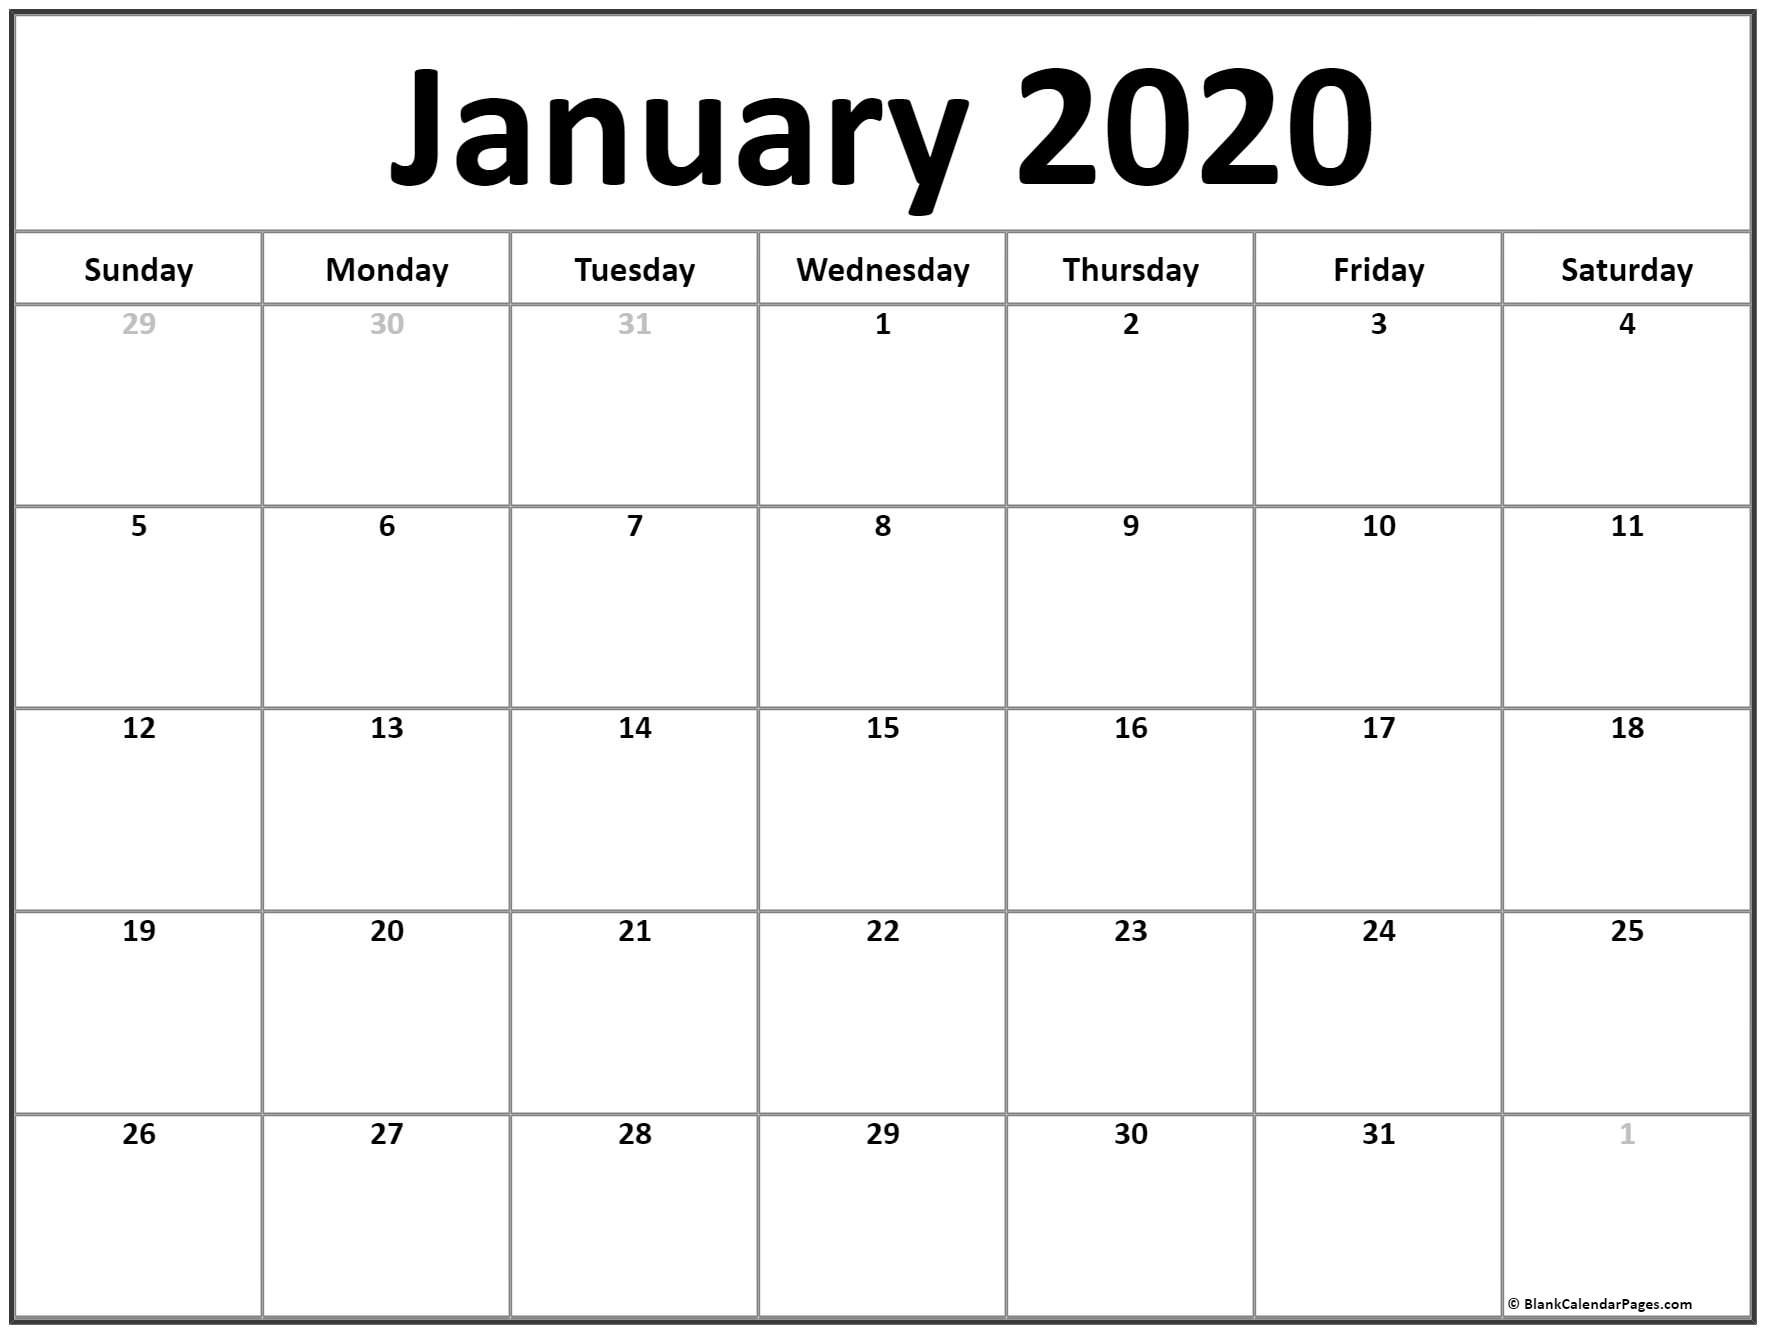 January 2020 Calendar Printable - Togo.wpart.co